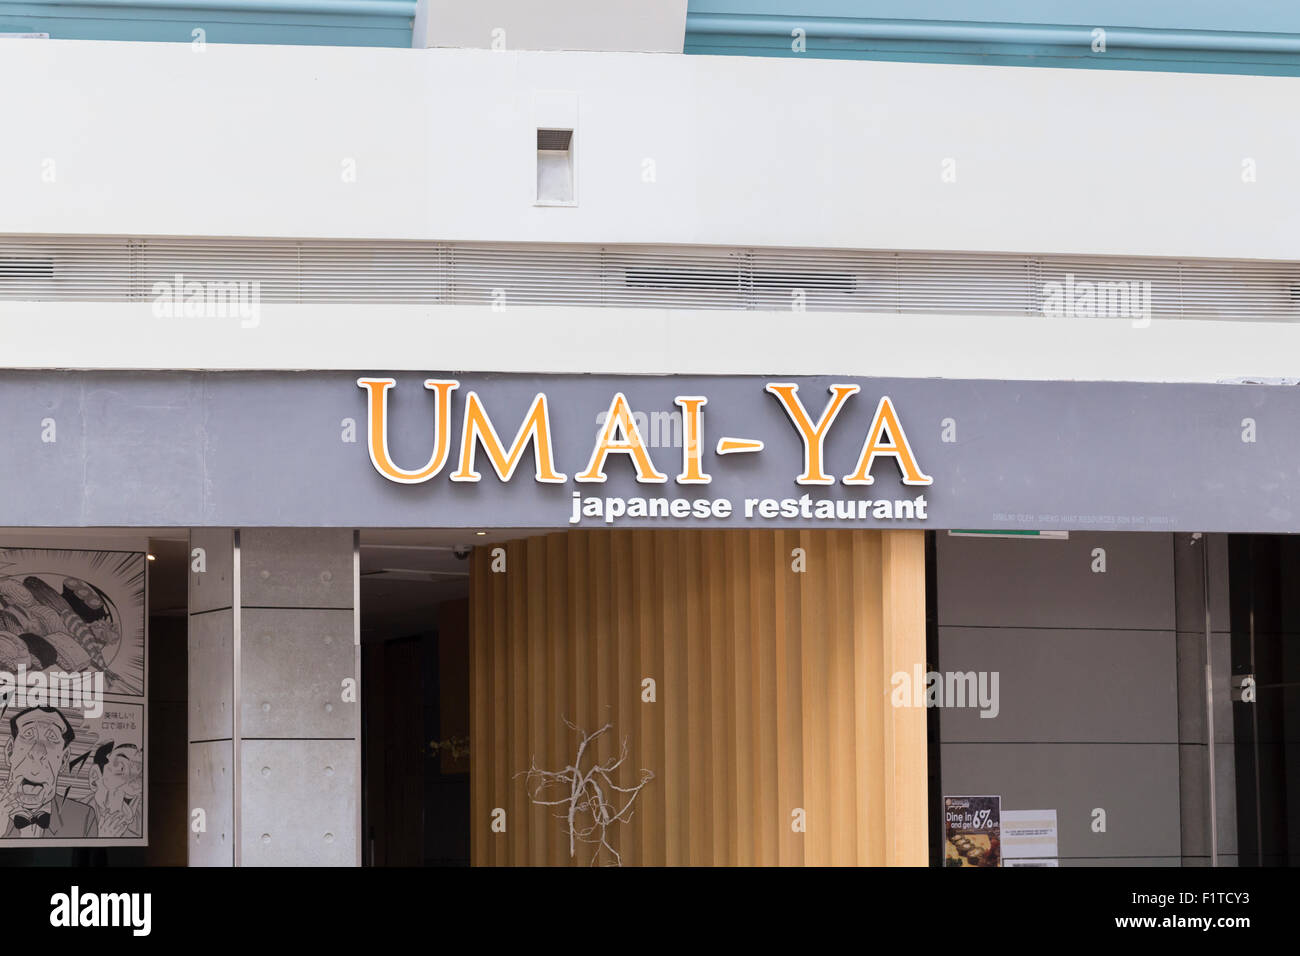 Umai-ya restaurant logo Stock Photo